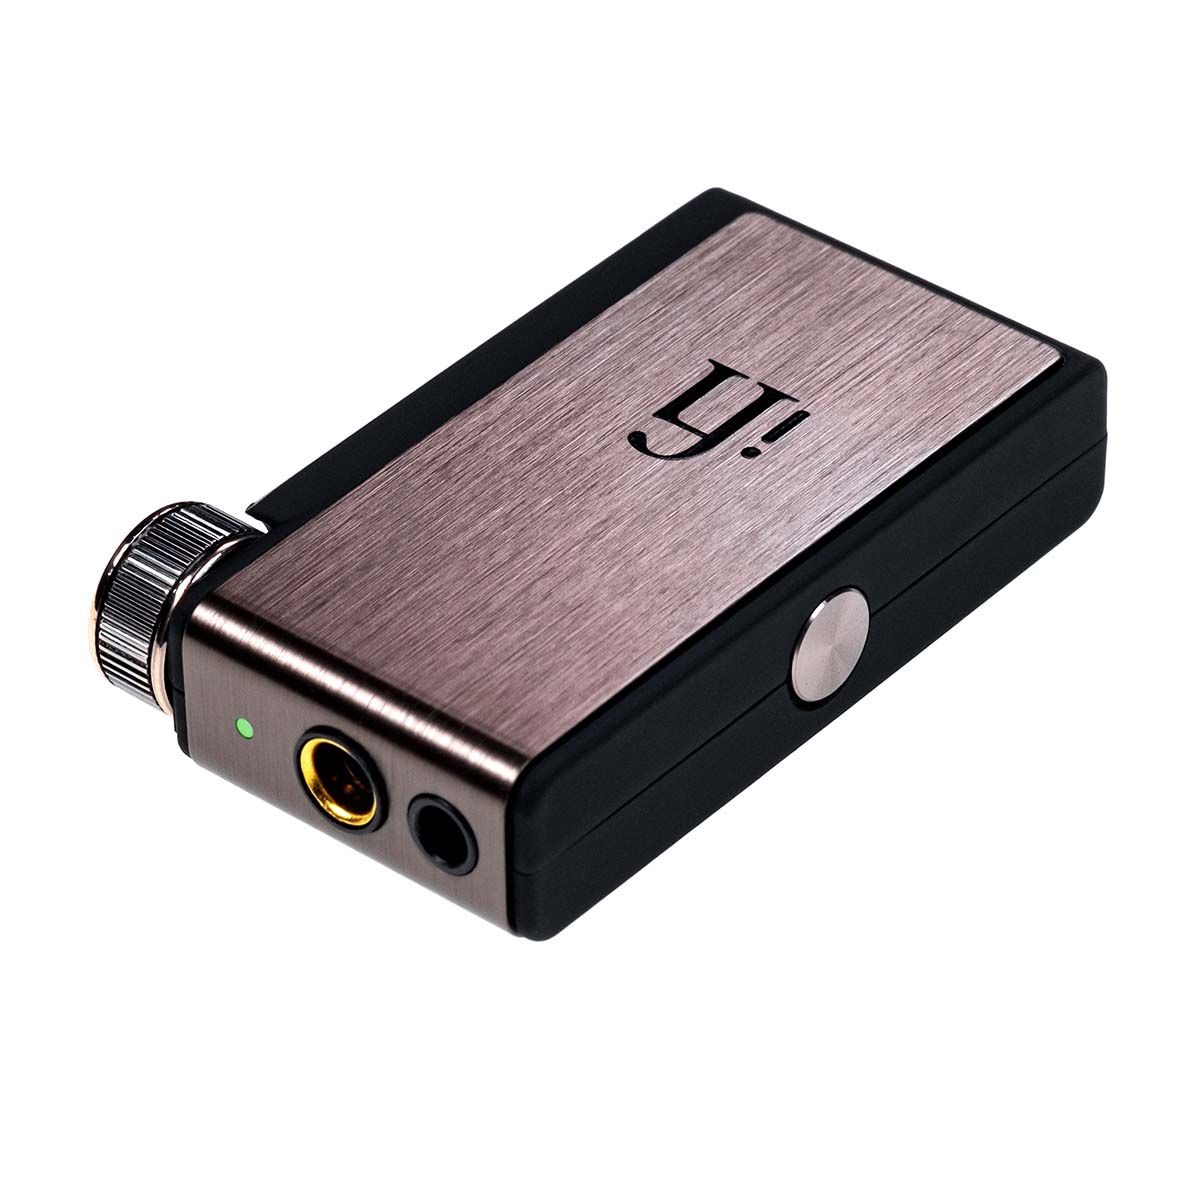 iFi GO BLU Headphone DAC & Amp, input and power button view